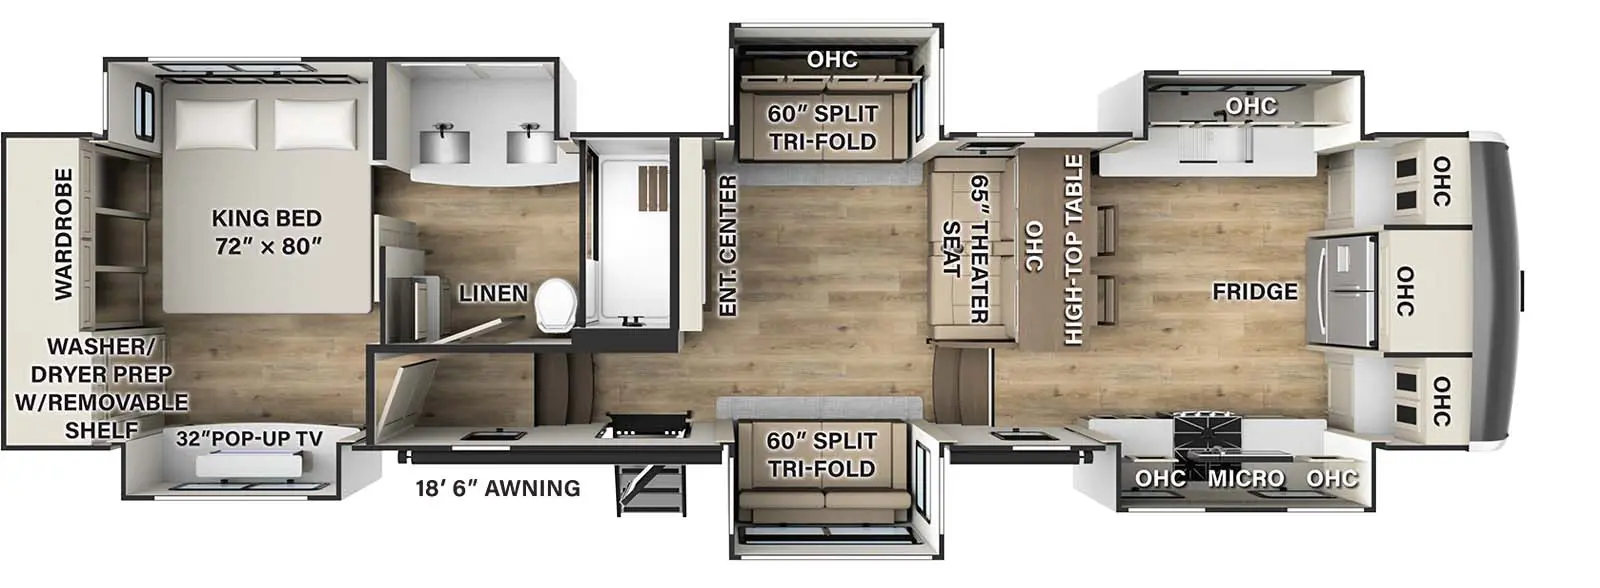 388FK - DSO Floorplan Image